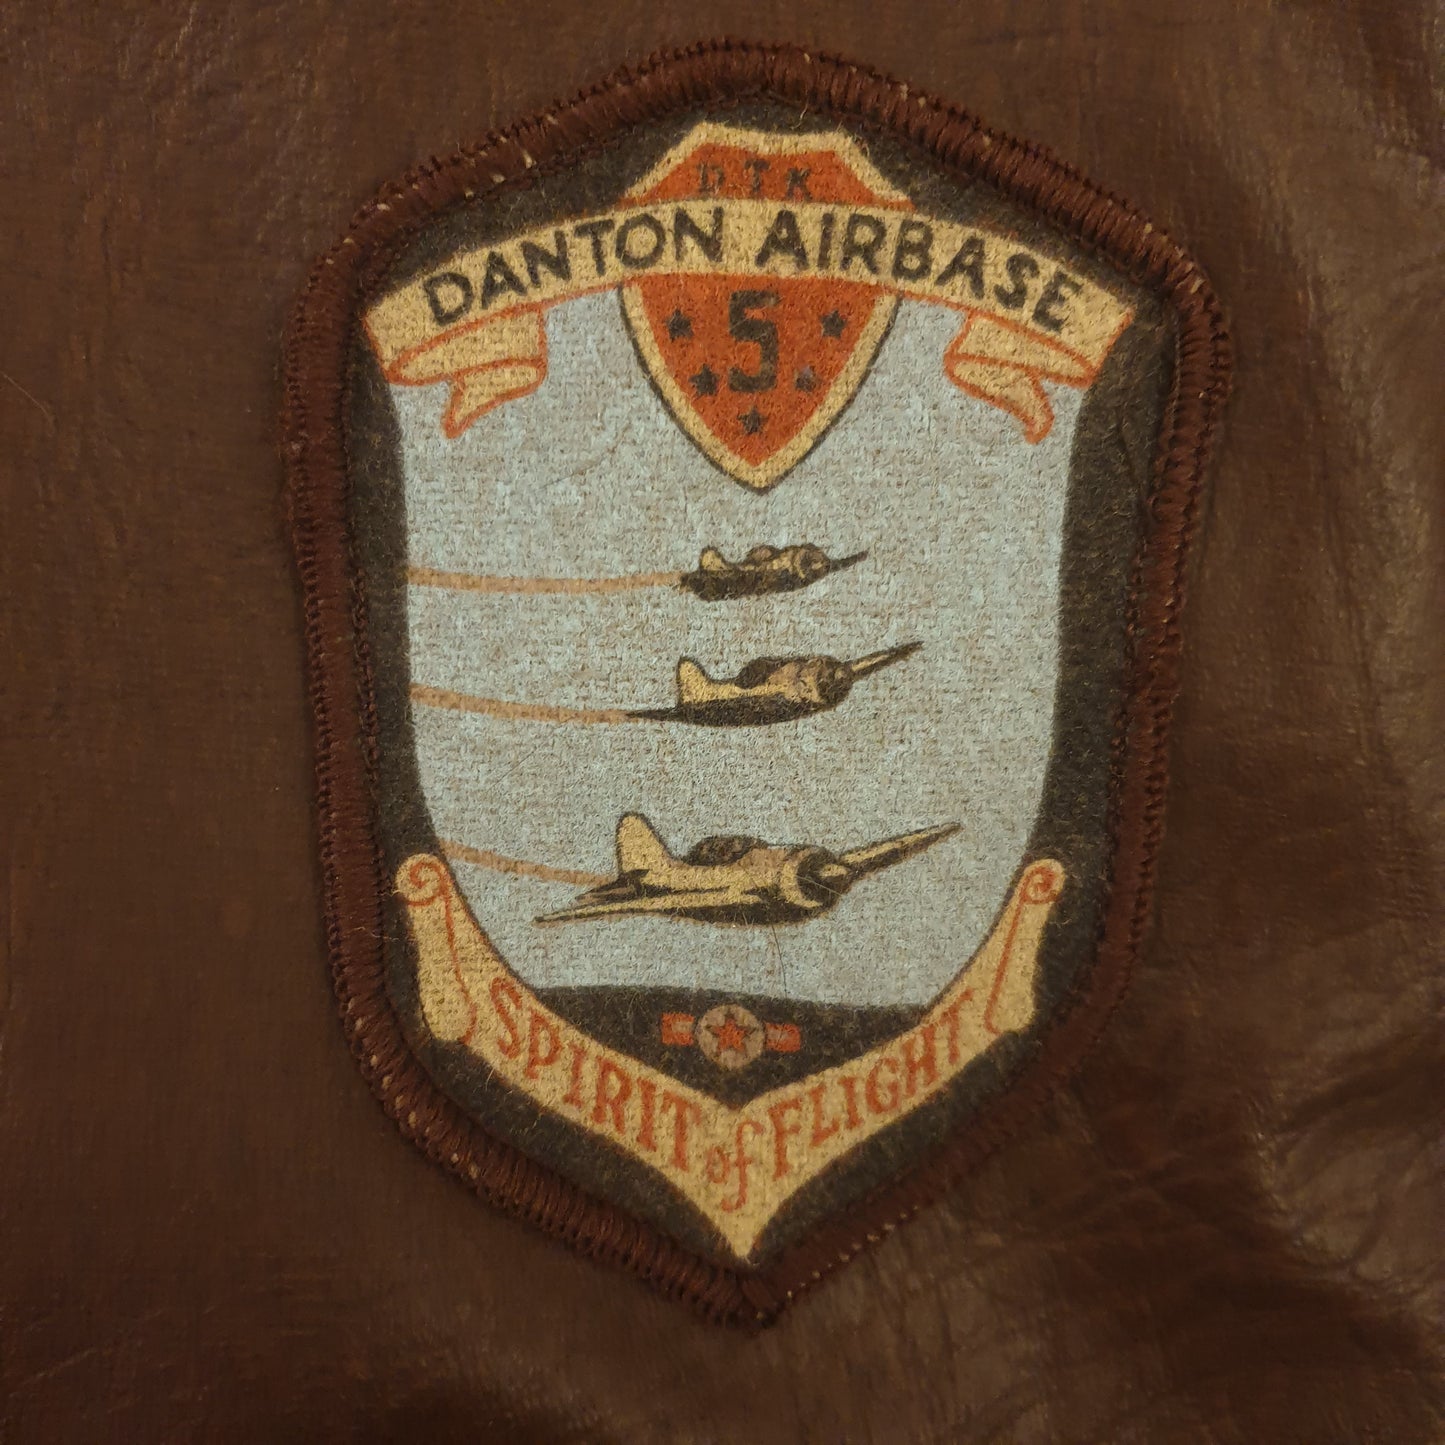 Bomber "Dakota Special Flight Unit" XS